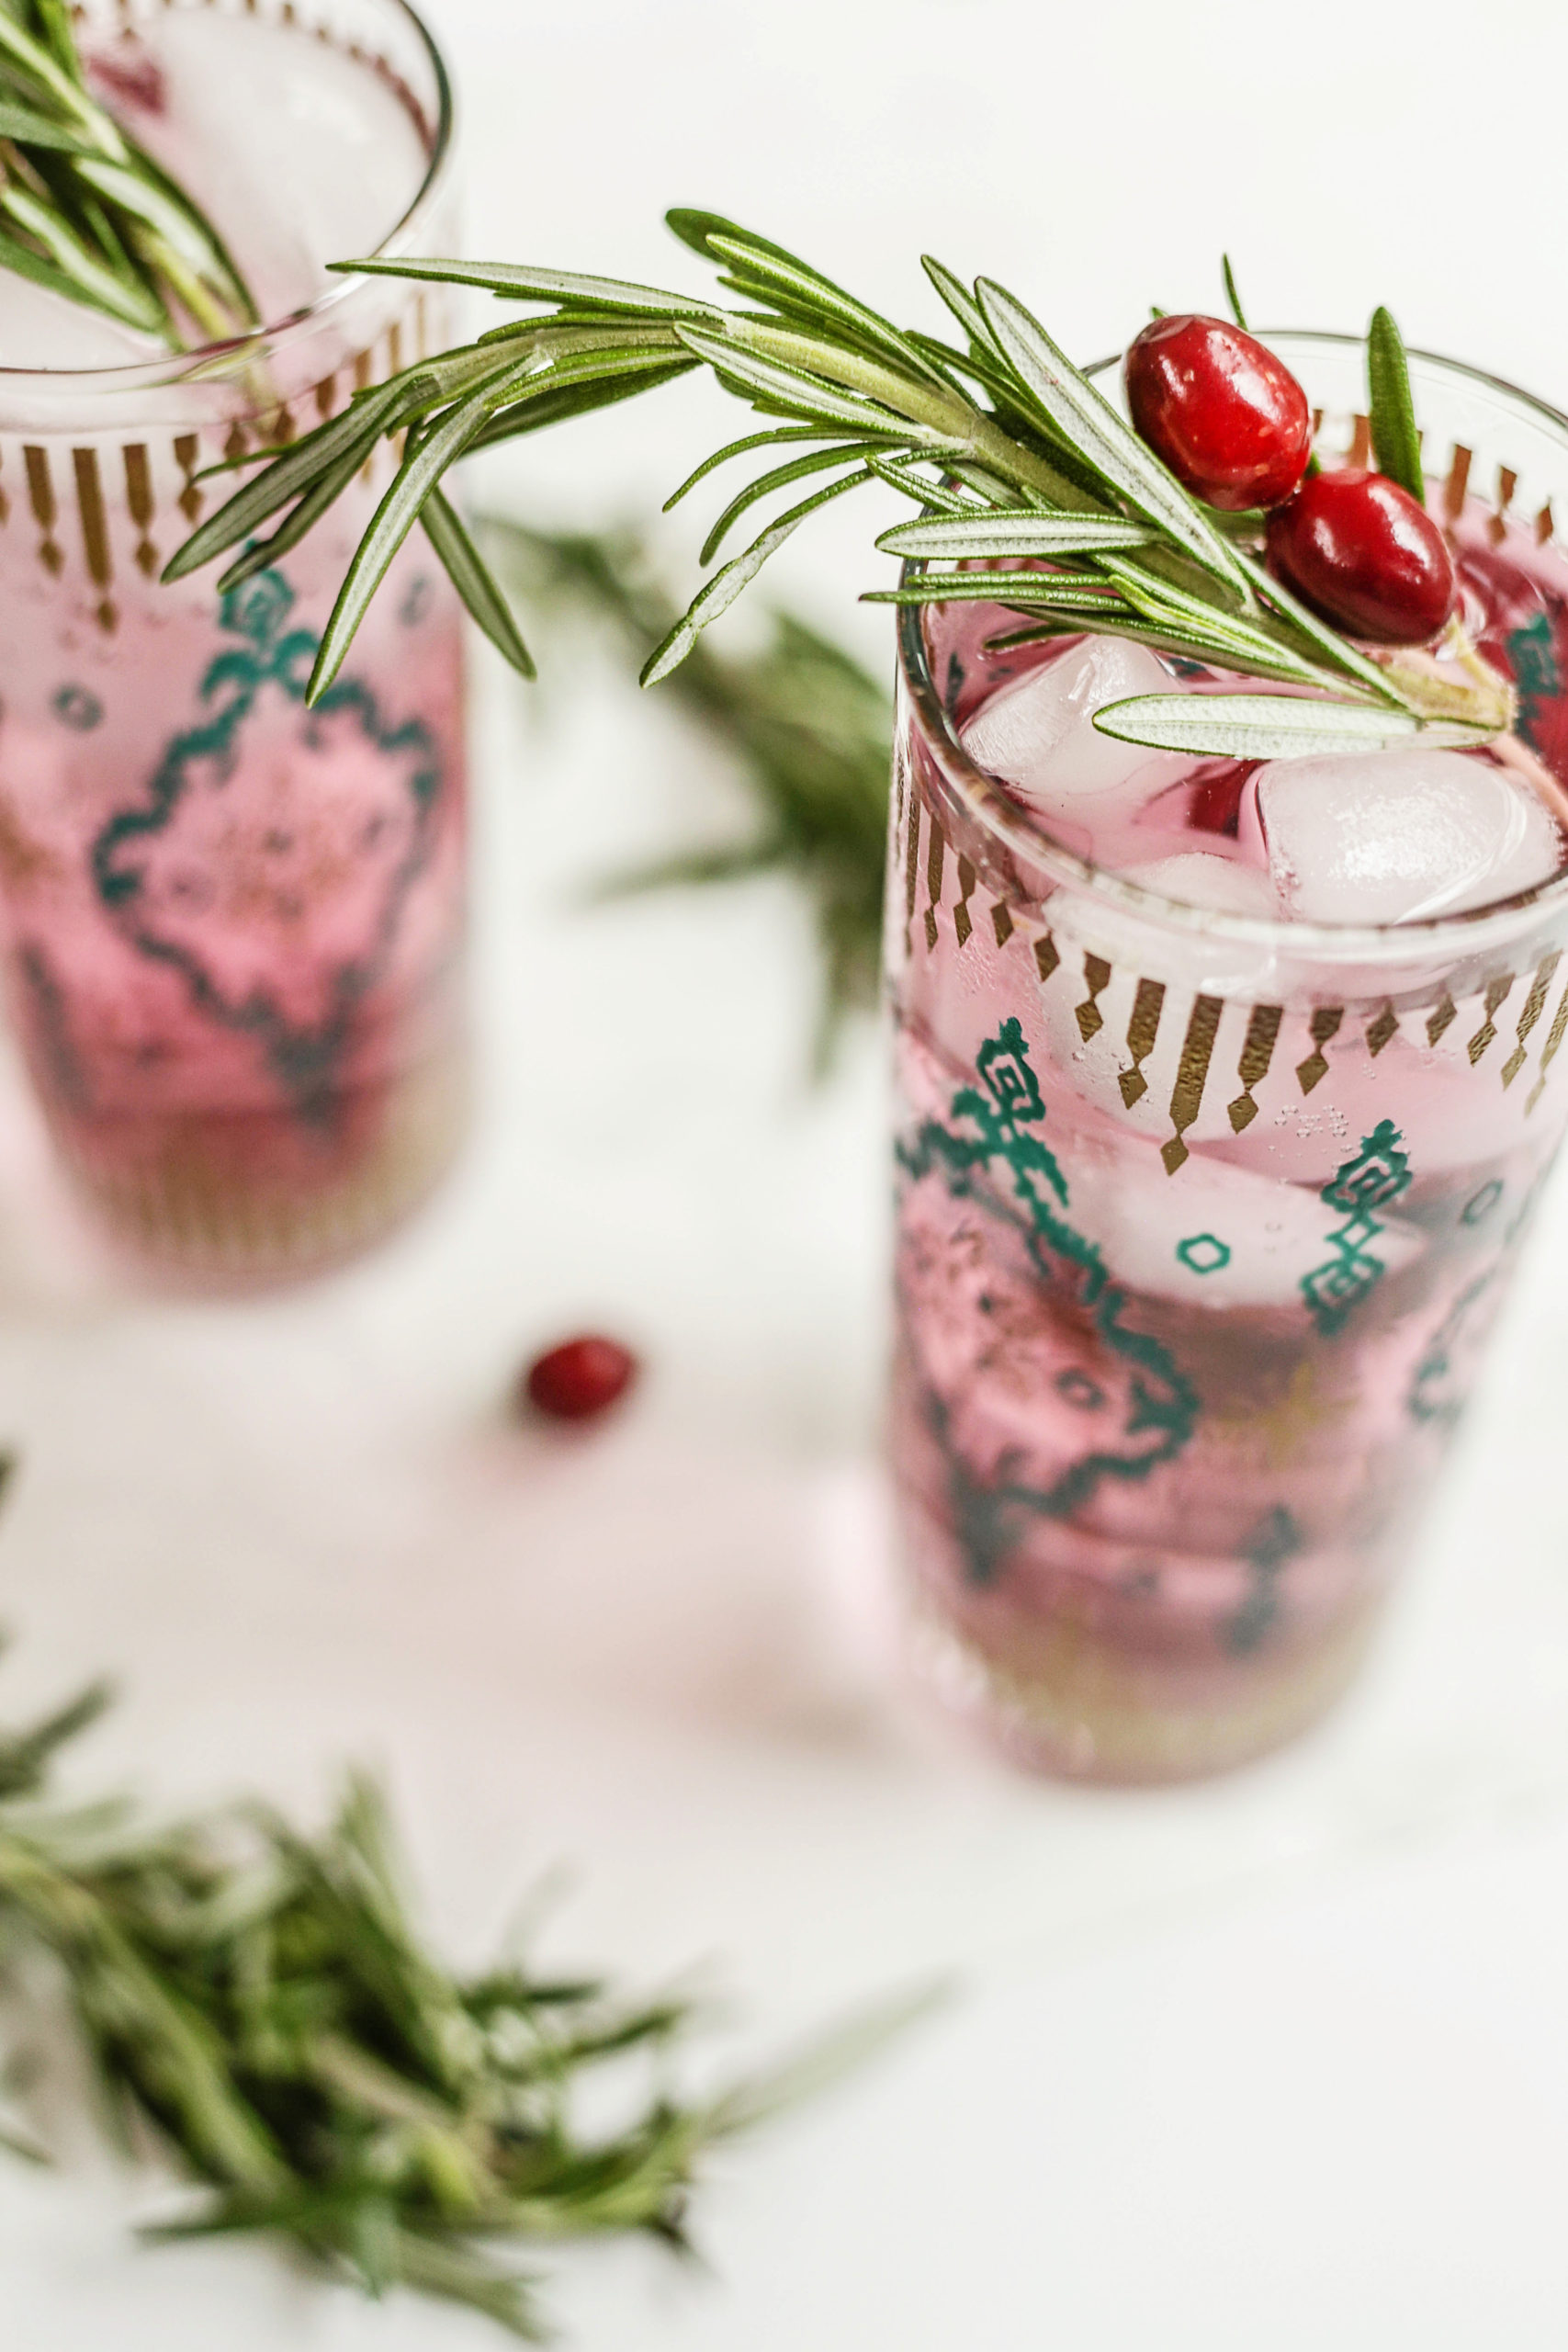 Low-Cal, Zero Sugar Holiday Cocktail Recipe